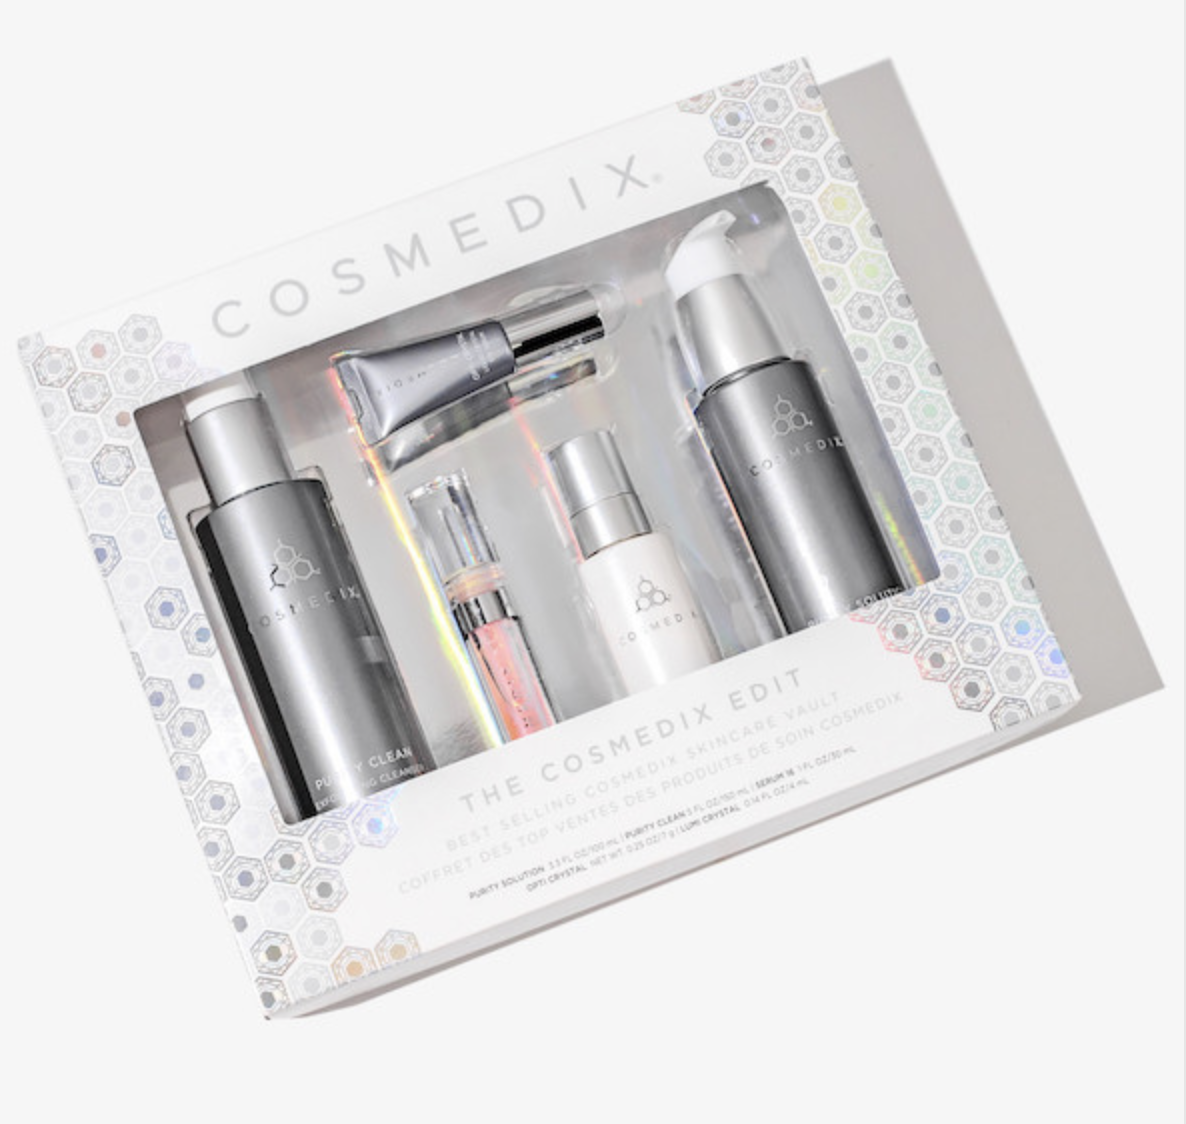 cosmedix edit skincare kit